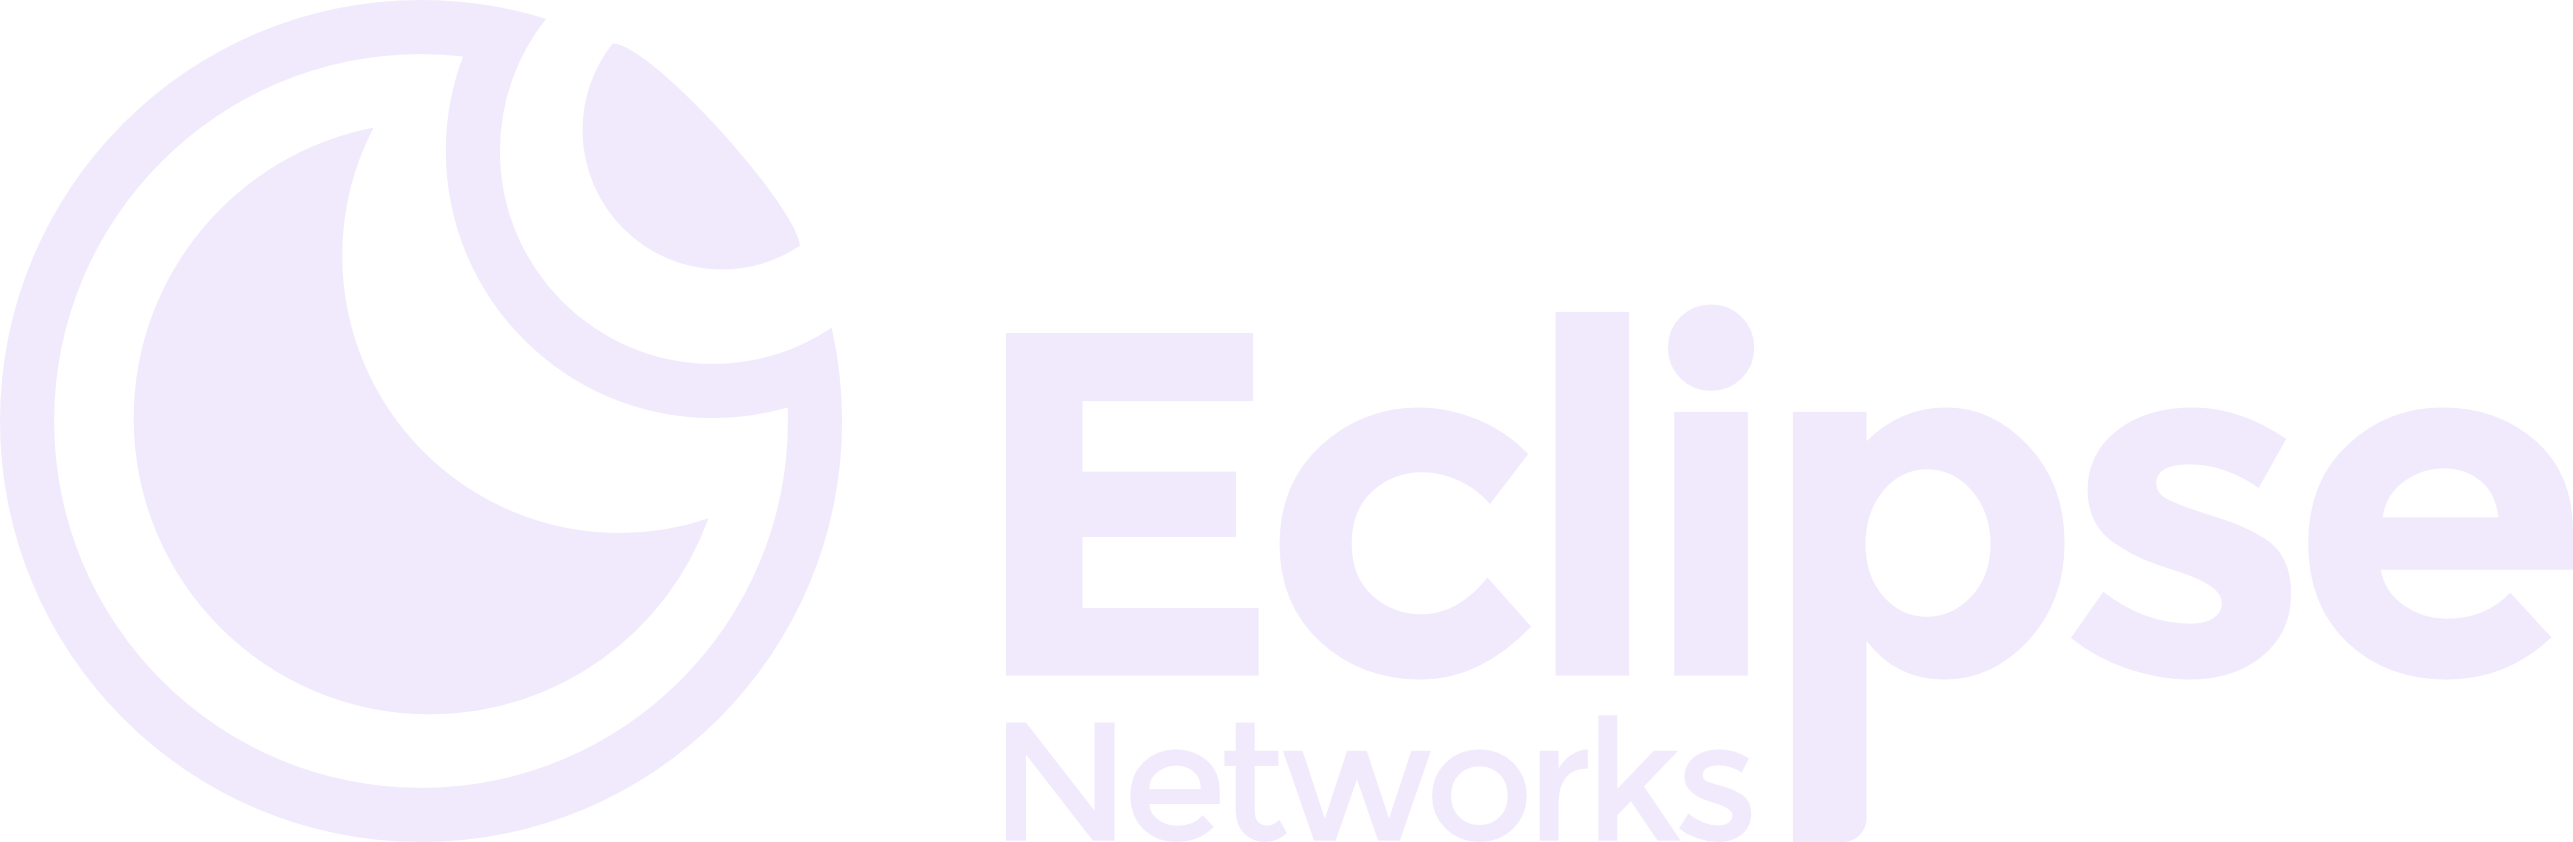 Eclipse Networks Ltd